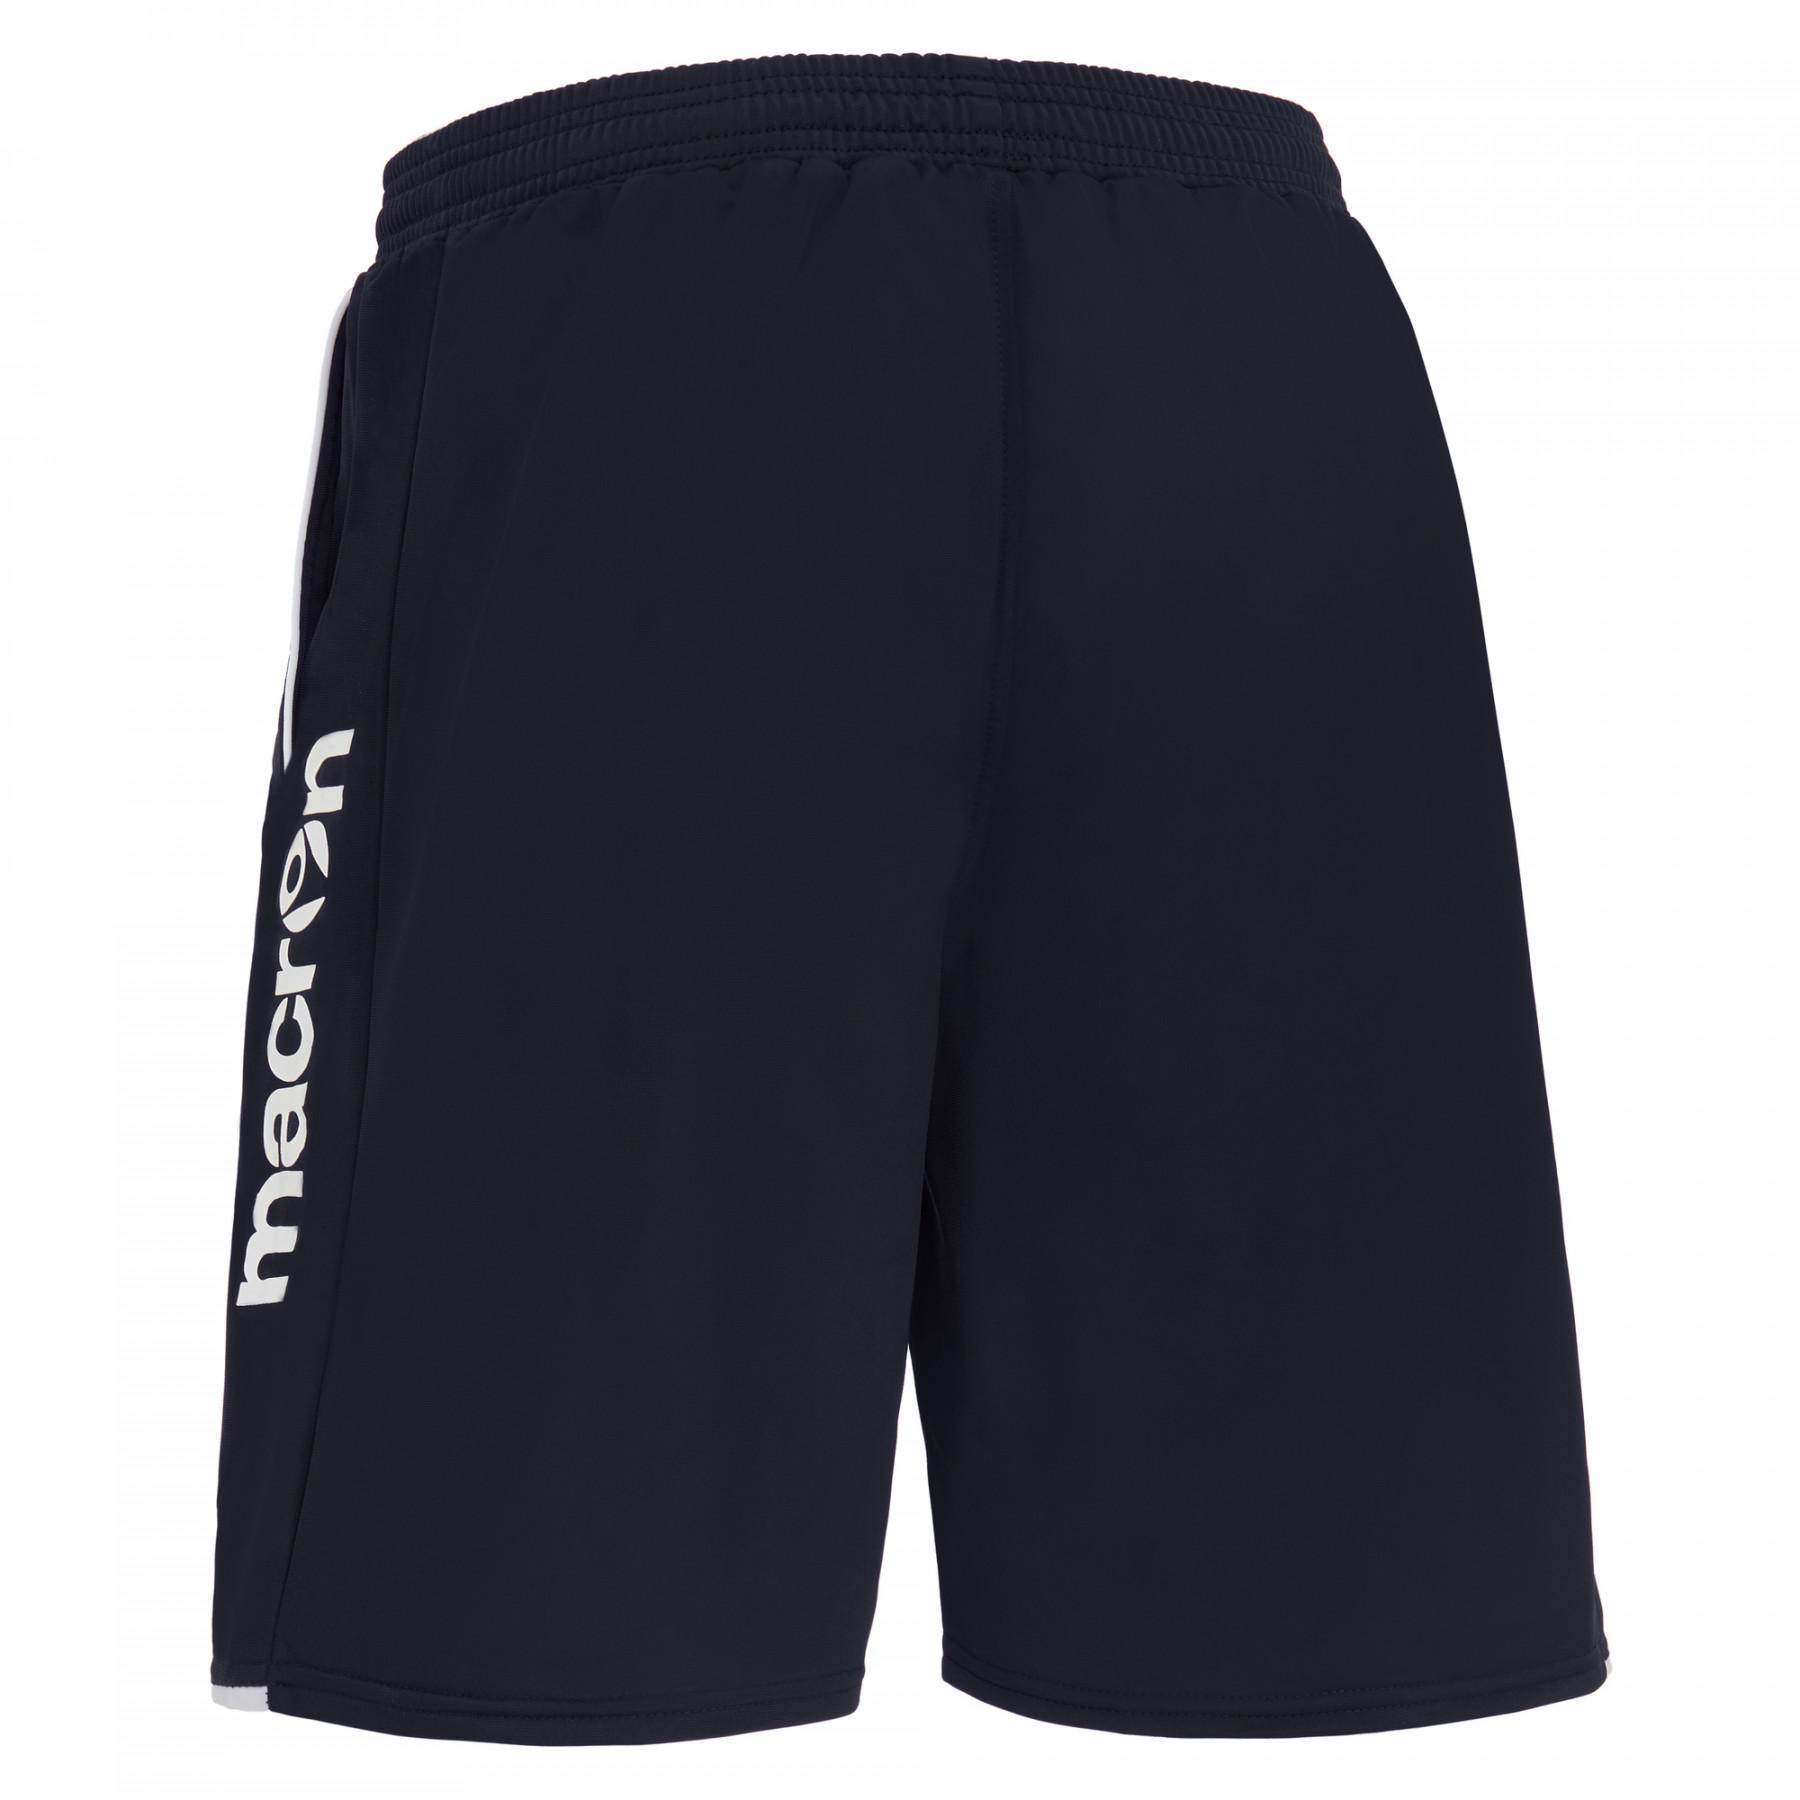 Bermuda shorts Macron kama